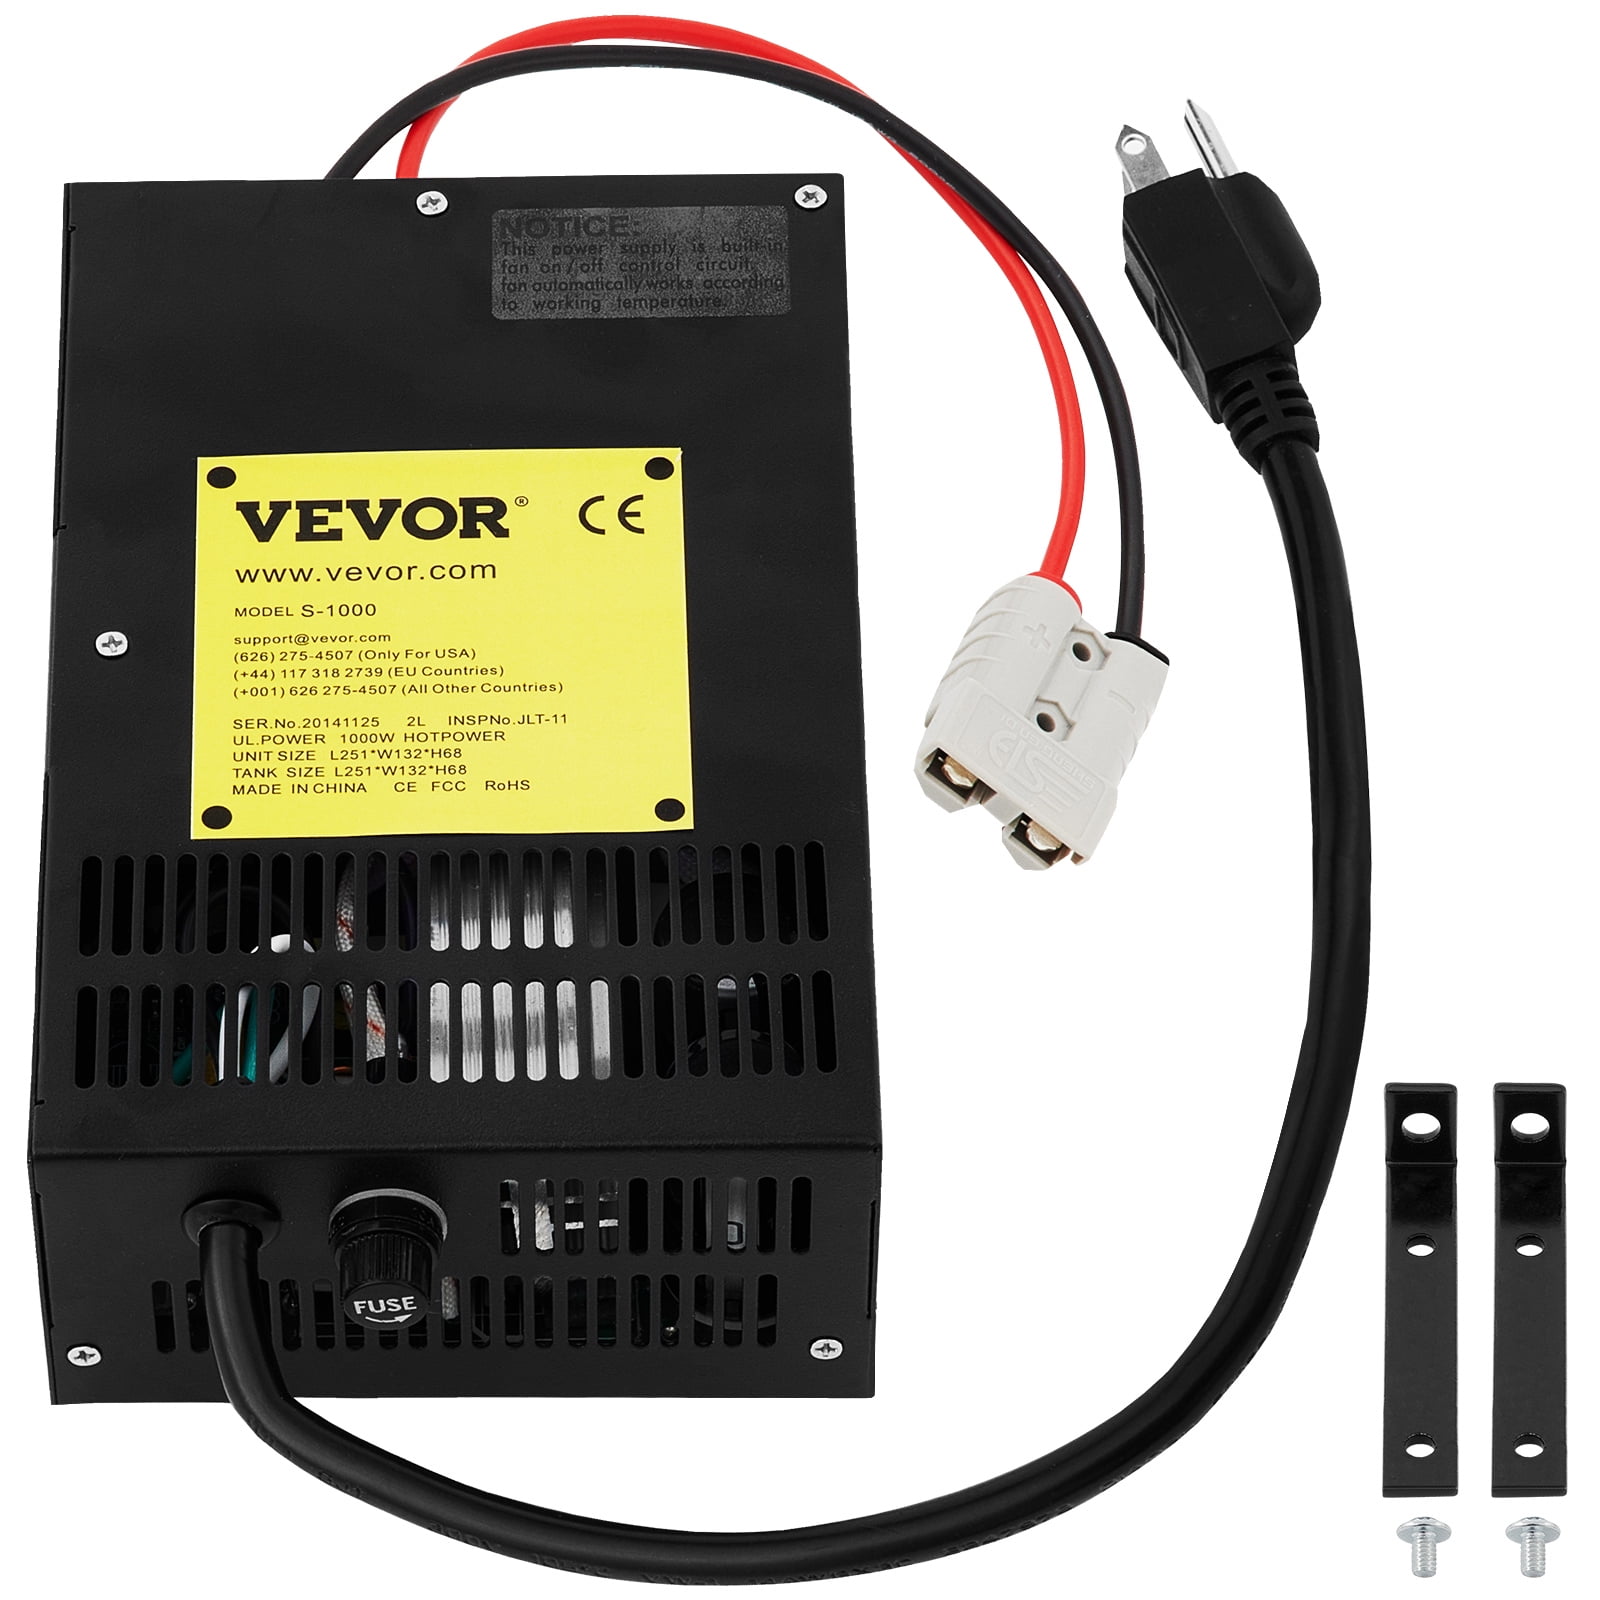 VEVOR RV Power Converter Charger, 110v AC to 12v DC, Power Supply Battery  Converter Charger 1000w with 13-16v DC Adjustable Operating Range